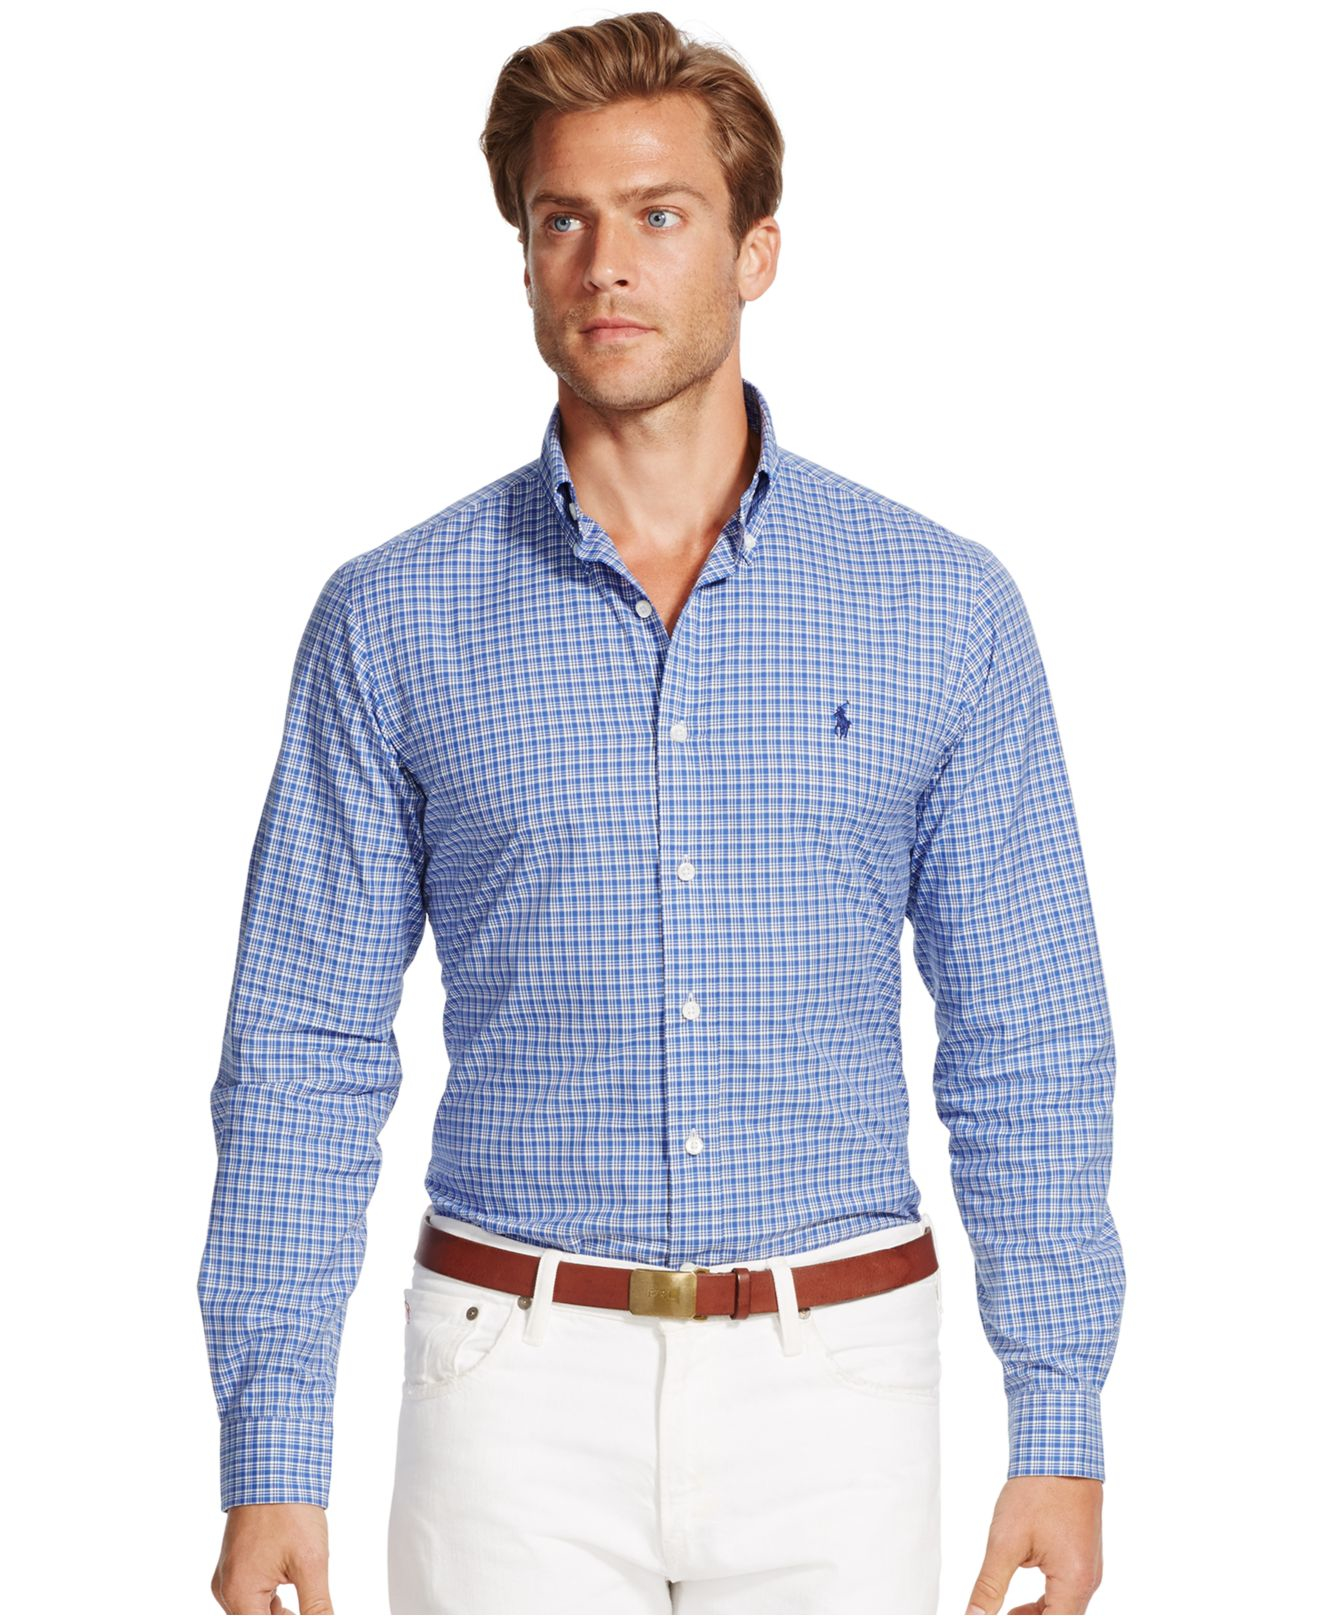 Polo Ralph Lauren Checked Poplin Shirt in Navy (Blue) for Men - Lyst